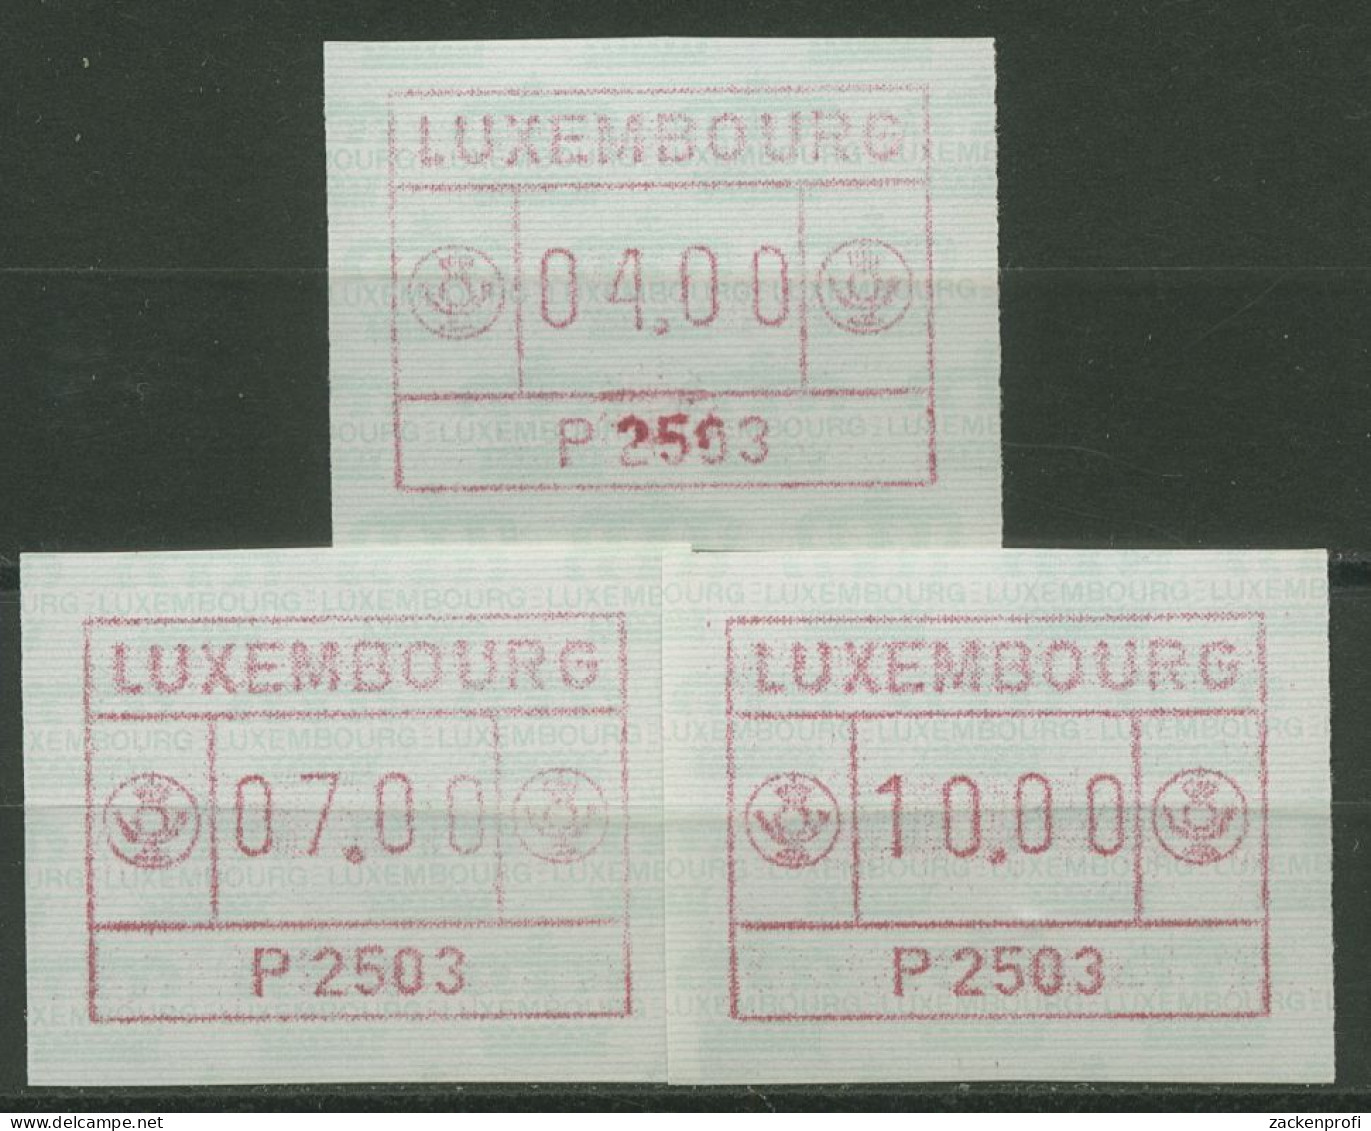 Luxemburg 1983 Automatenmarke Automat P 2503 Satz 1.3 B S1 Postfrisch - Automatenmarken